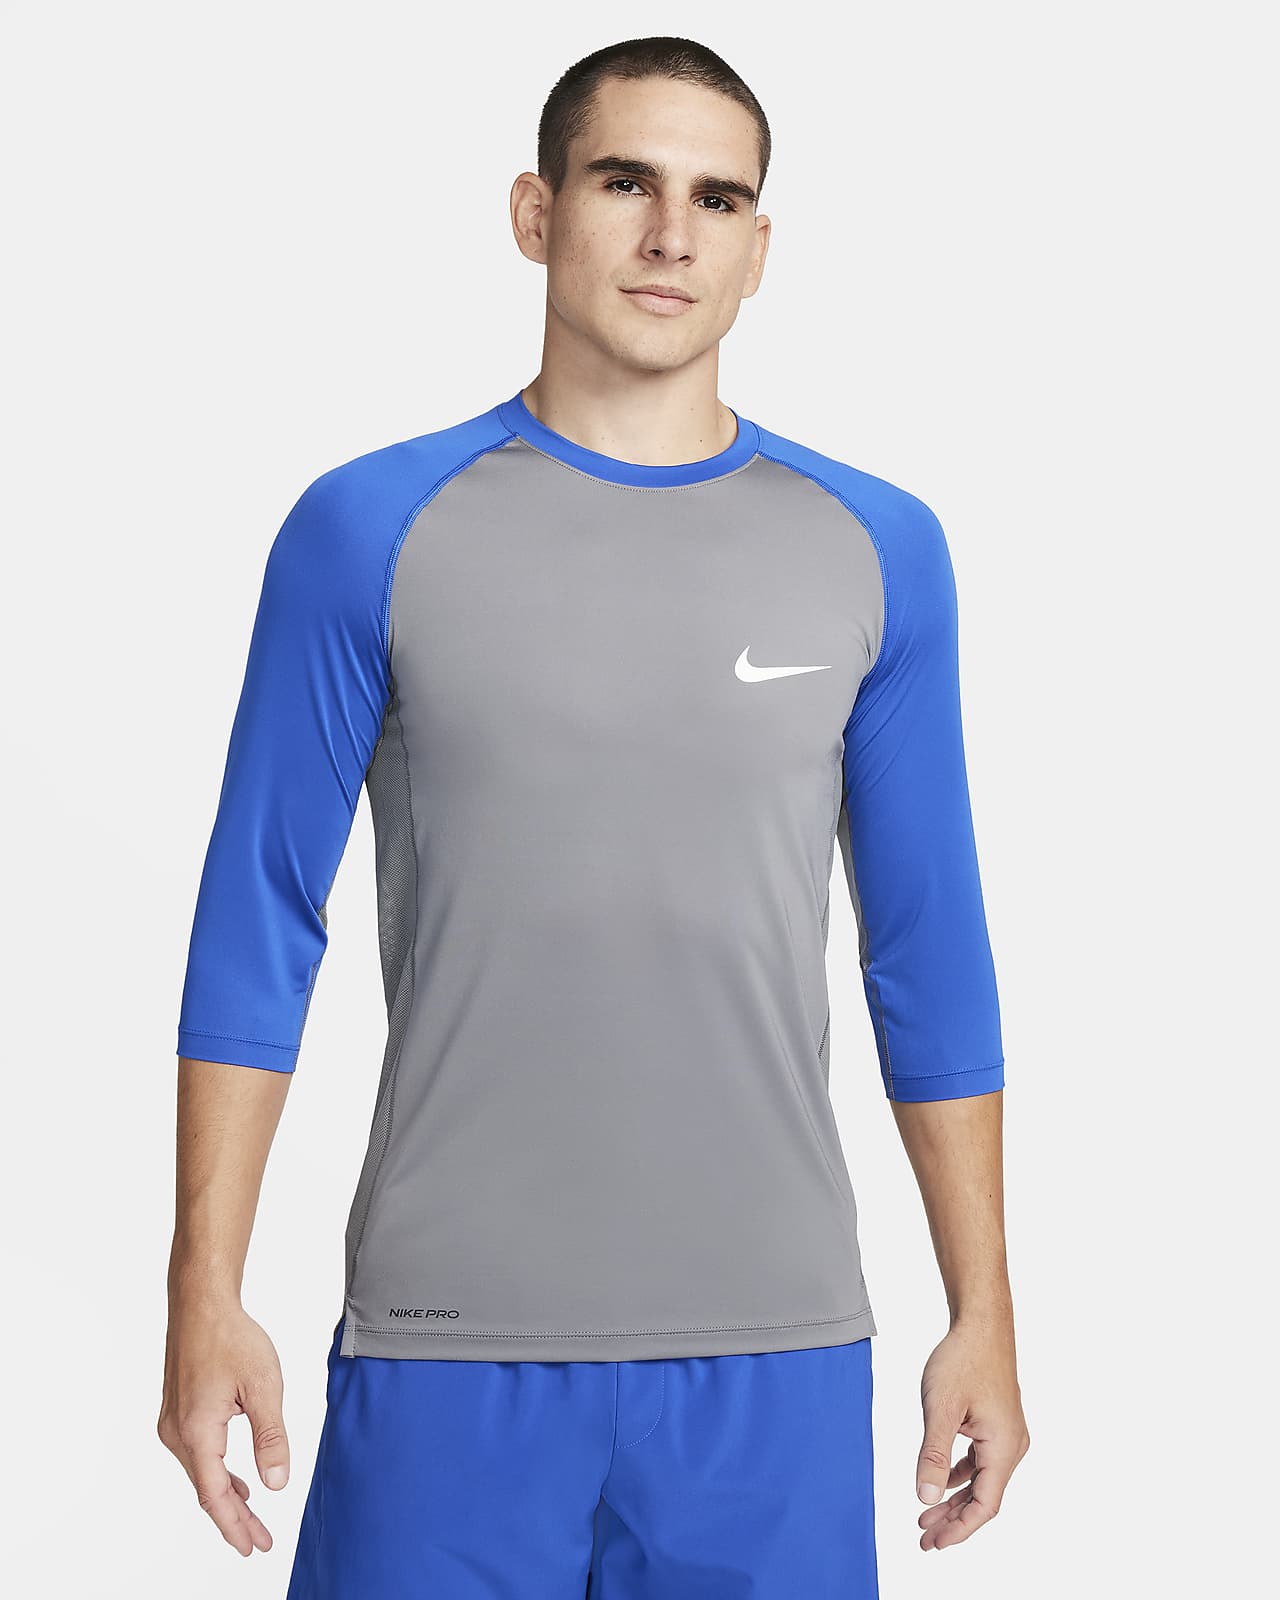 Nike Dri-FIT Men's 3/4-Length Sleeve Baseball Top